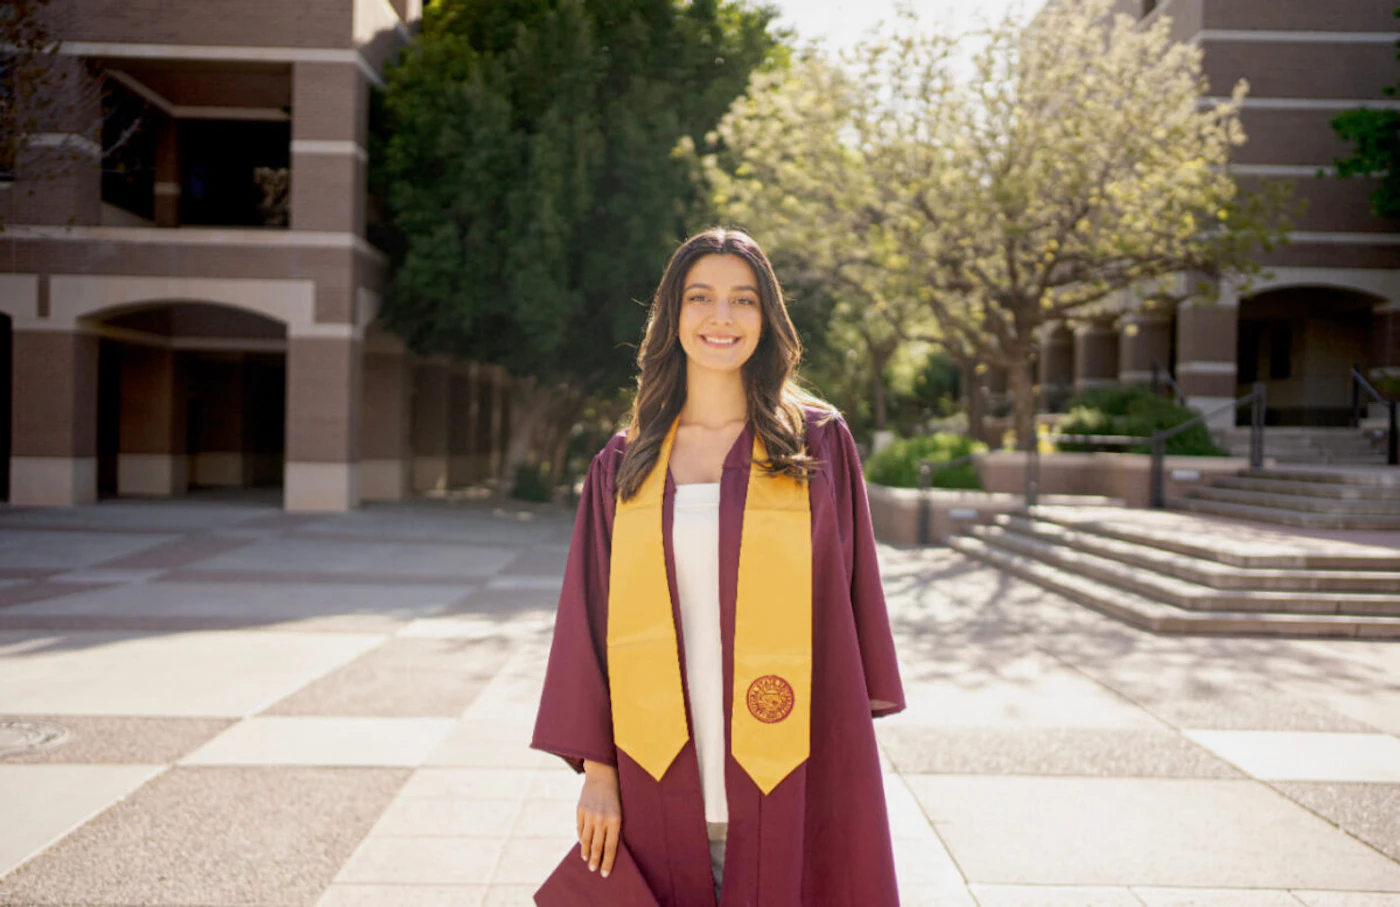 Grecia Cubillas graduating from Arizona State University. (Photo courtesy of Grecia Cubillas)